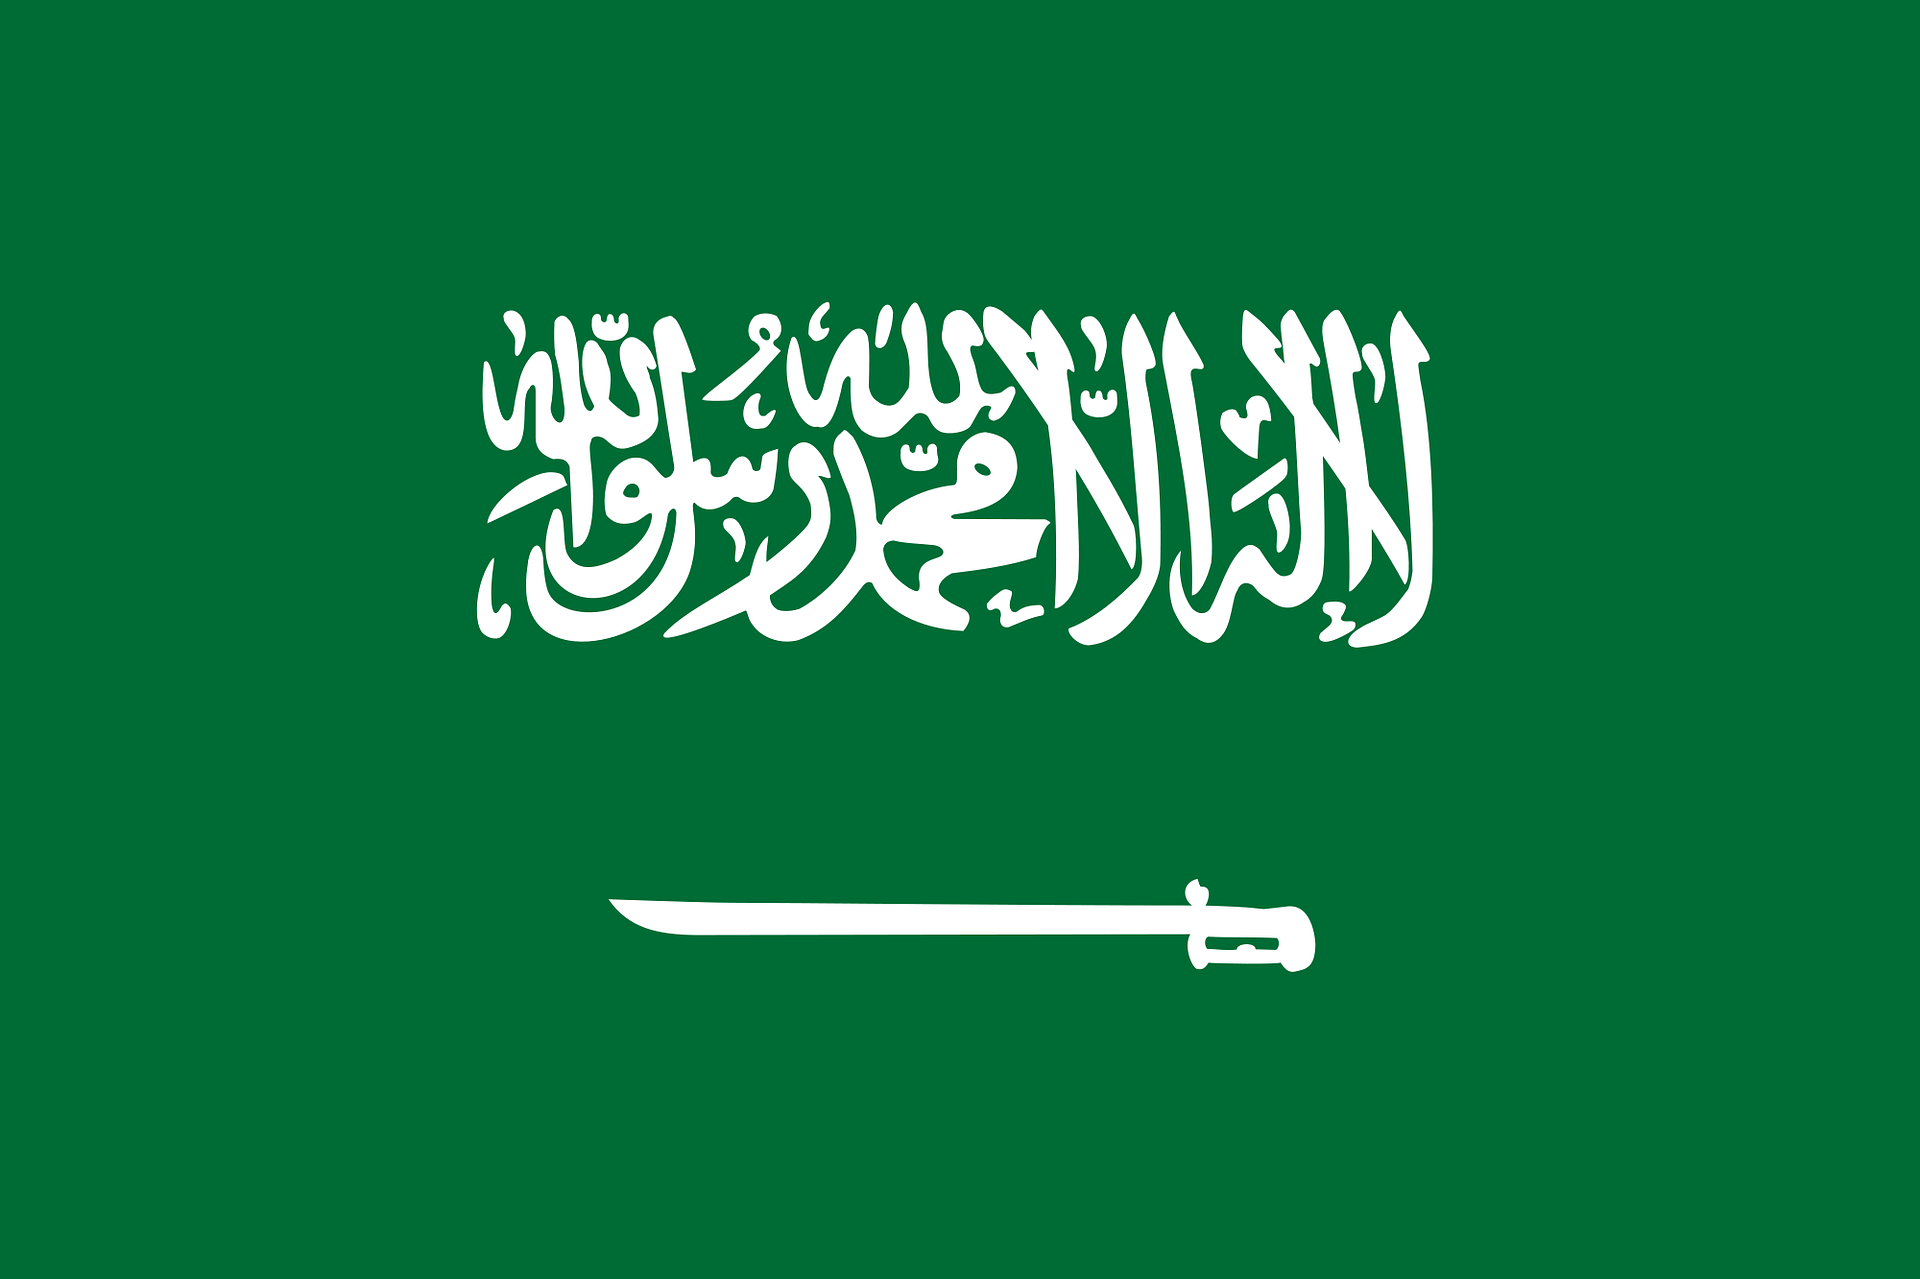 Saoedi Arabie visumaanvraag